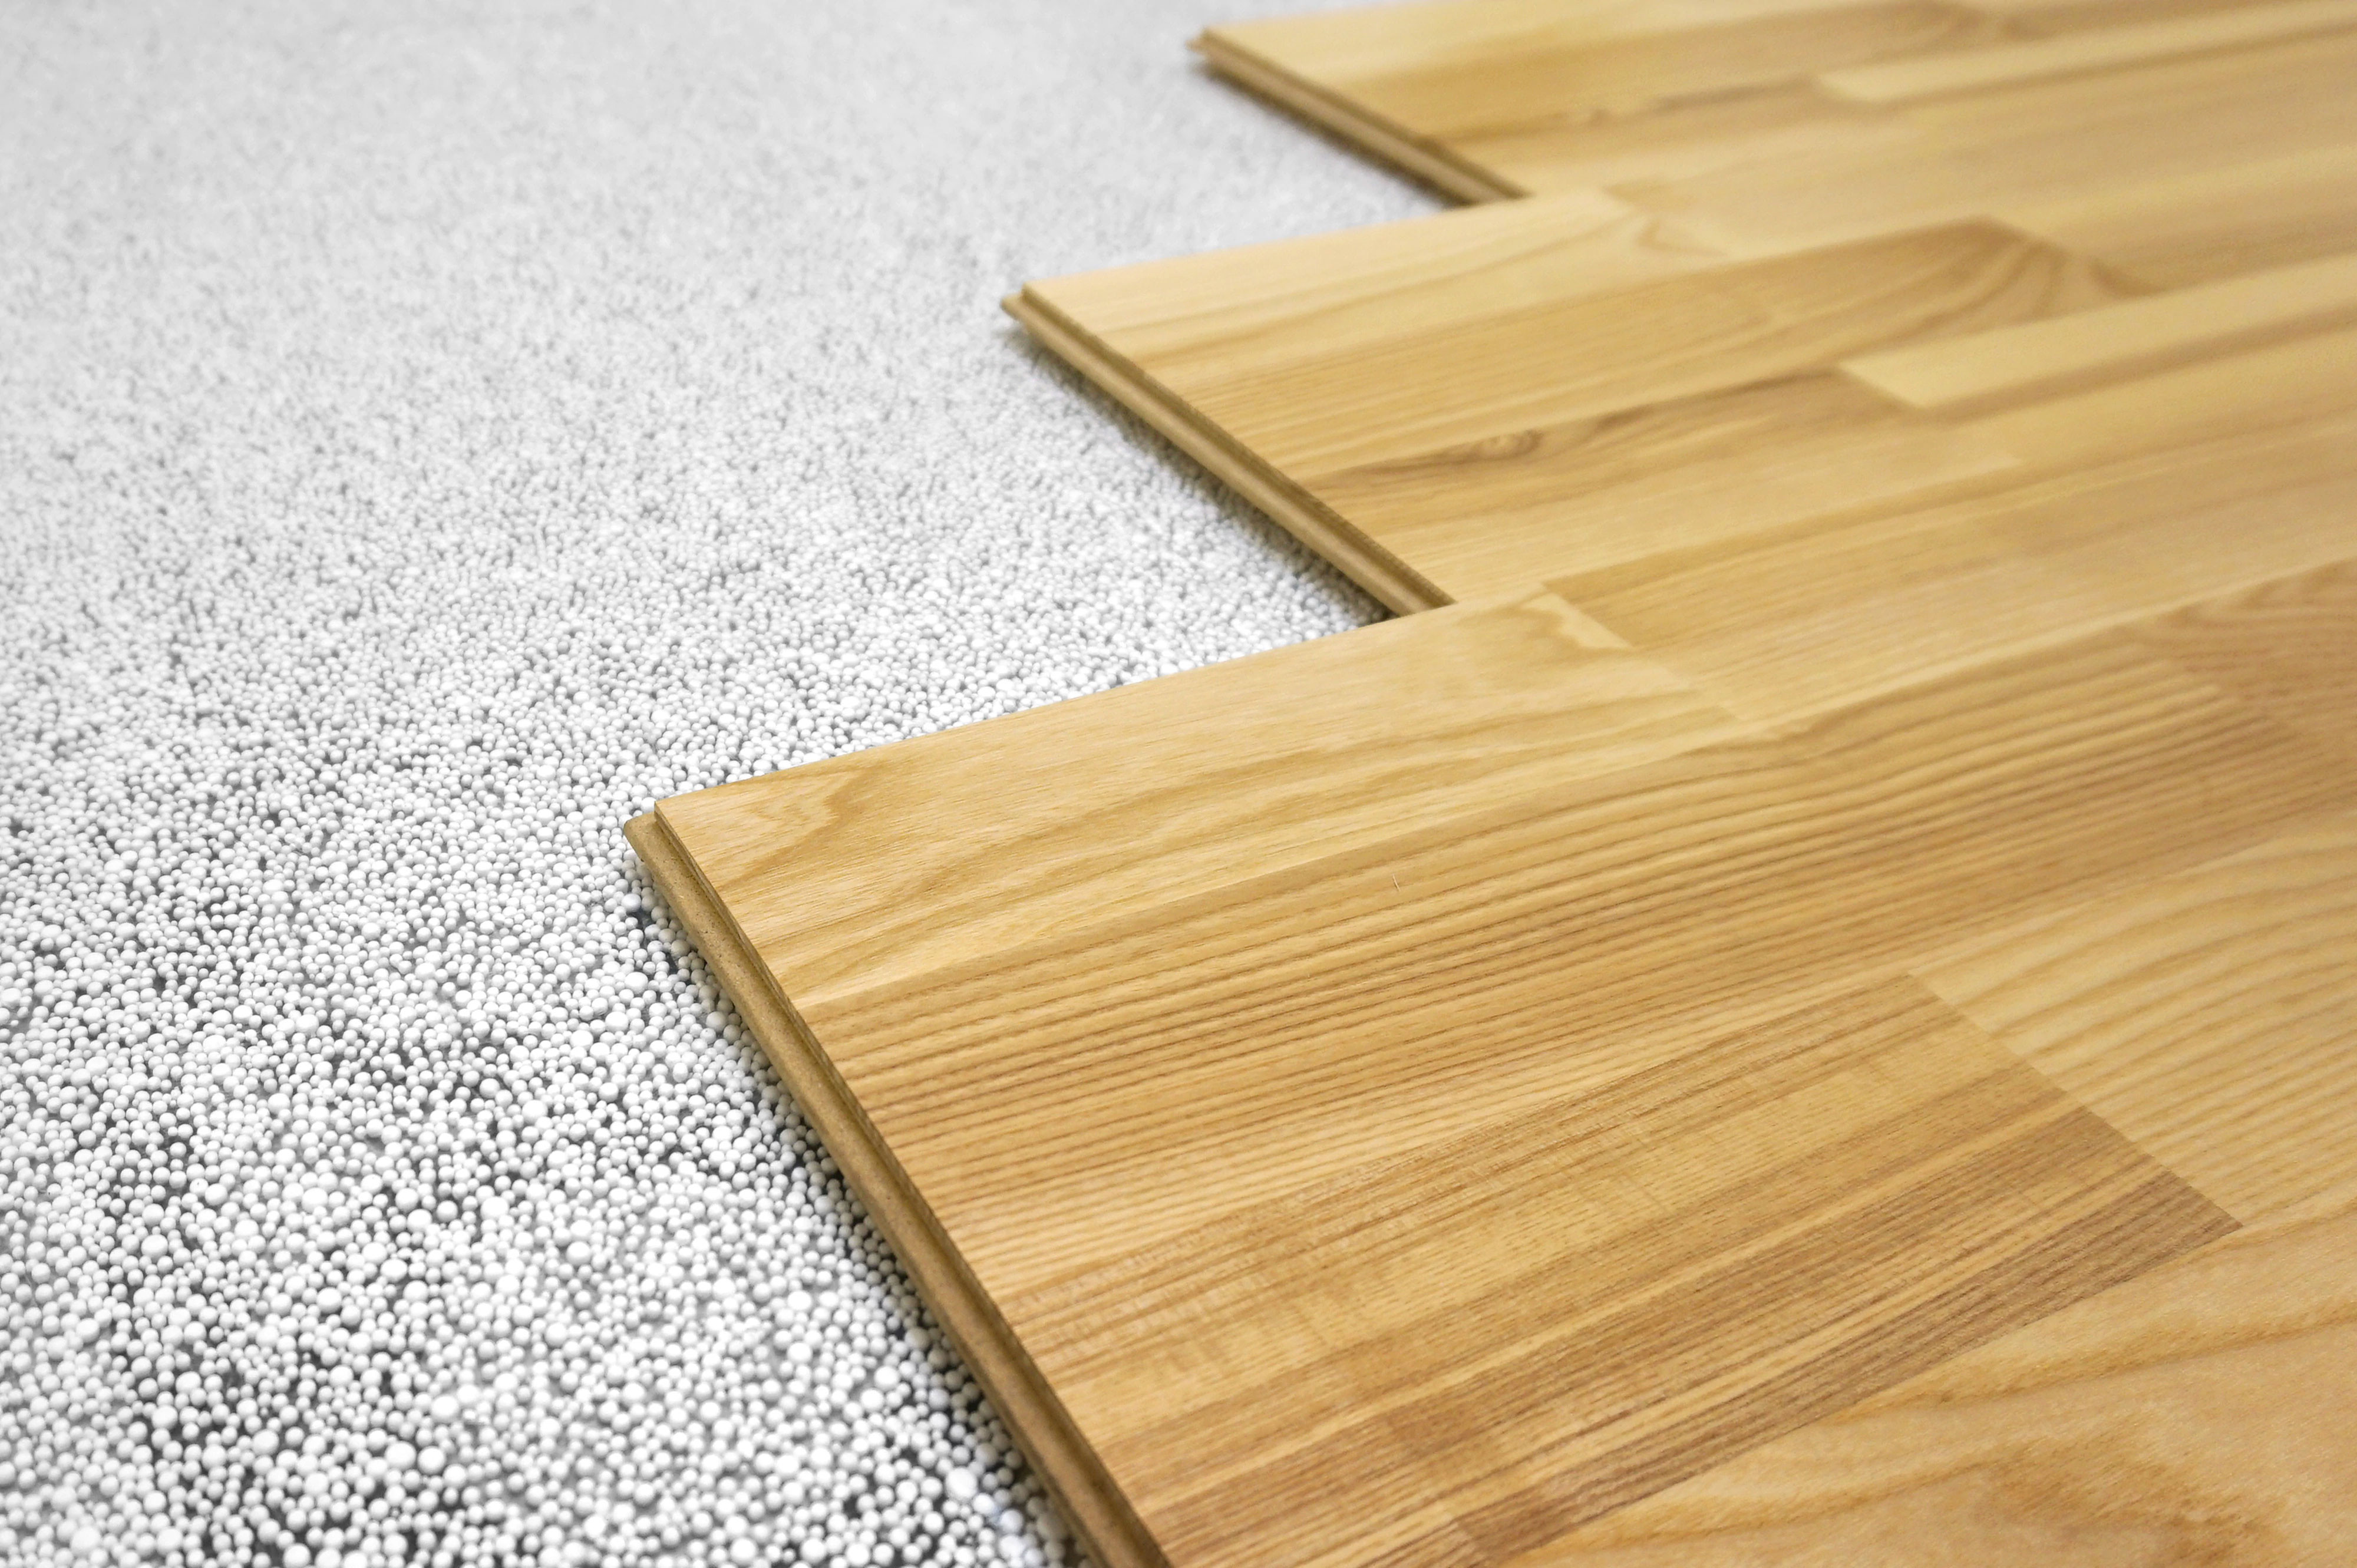 19 Popular Jasper Hardwood Flooring Reviews 2022 free download jasper hardwood flooring reviews of what does it cost to install laminate flooring angies list pertaining to wood lam